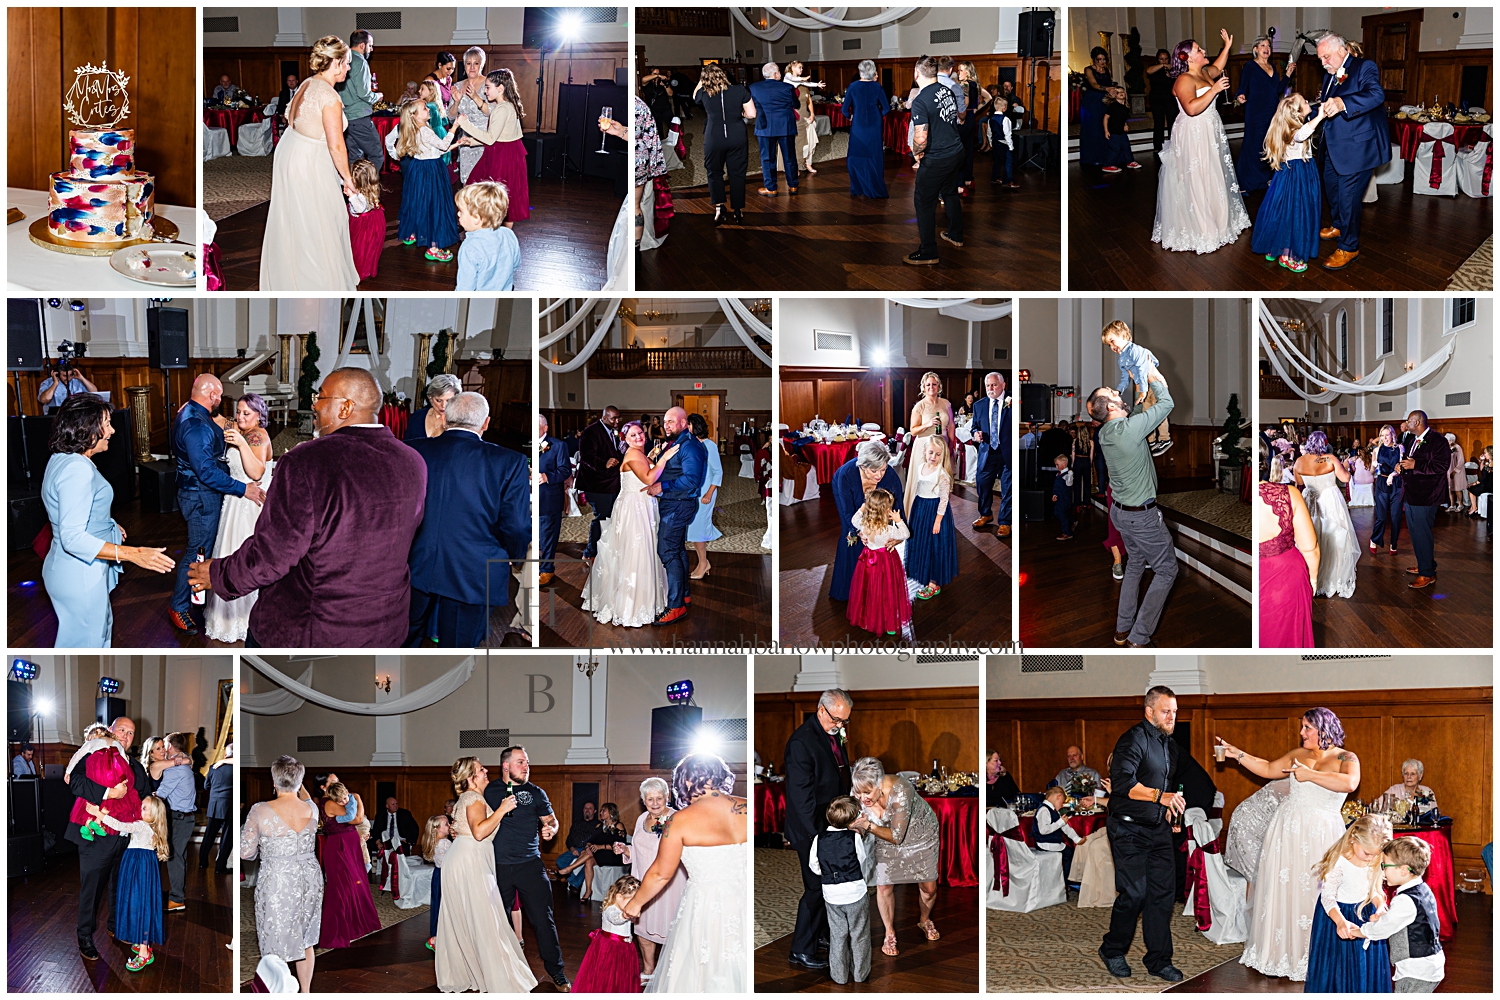 Open dance floor wedding photos are highlighted